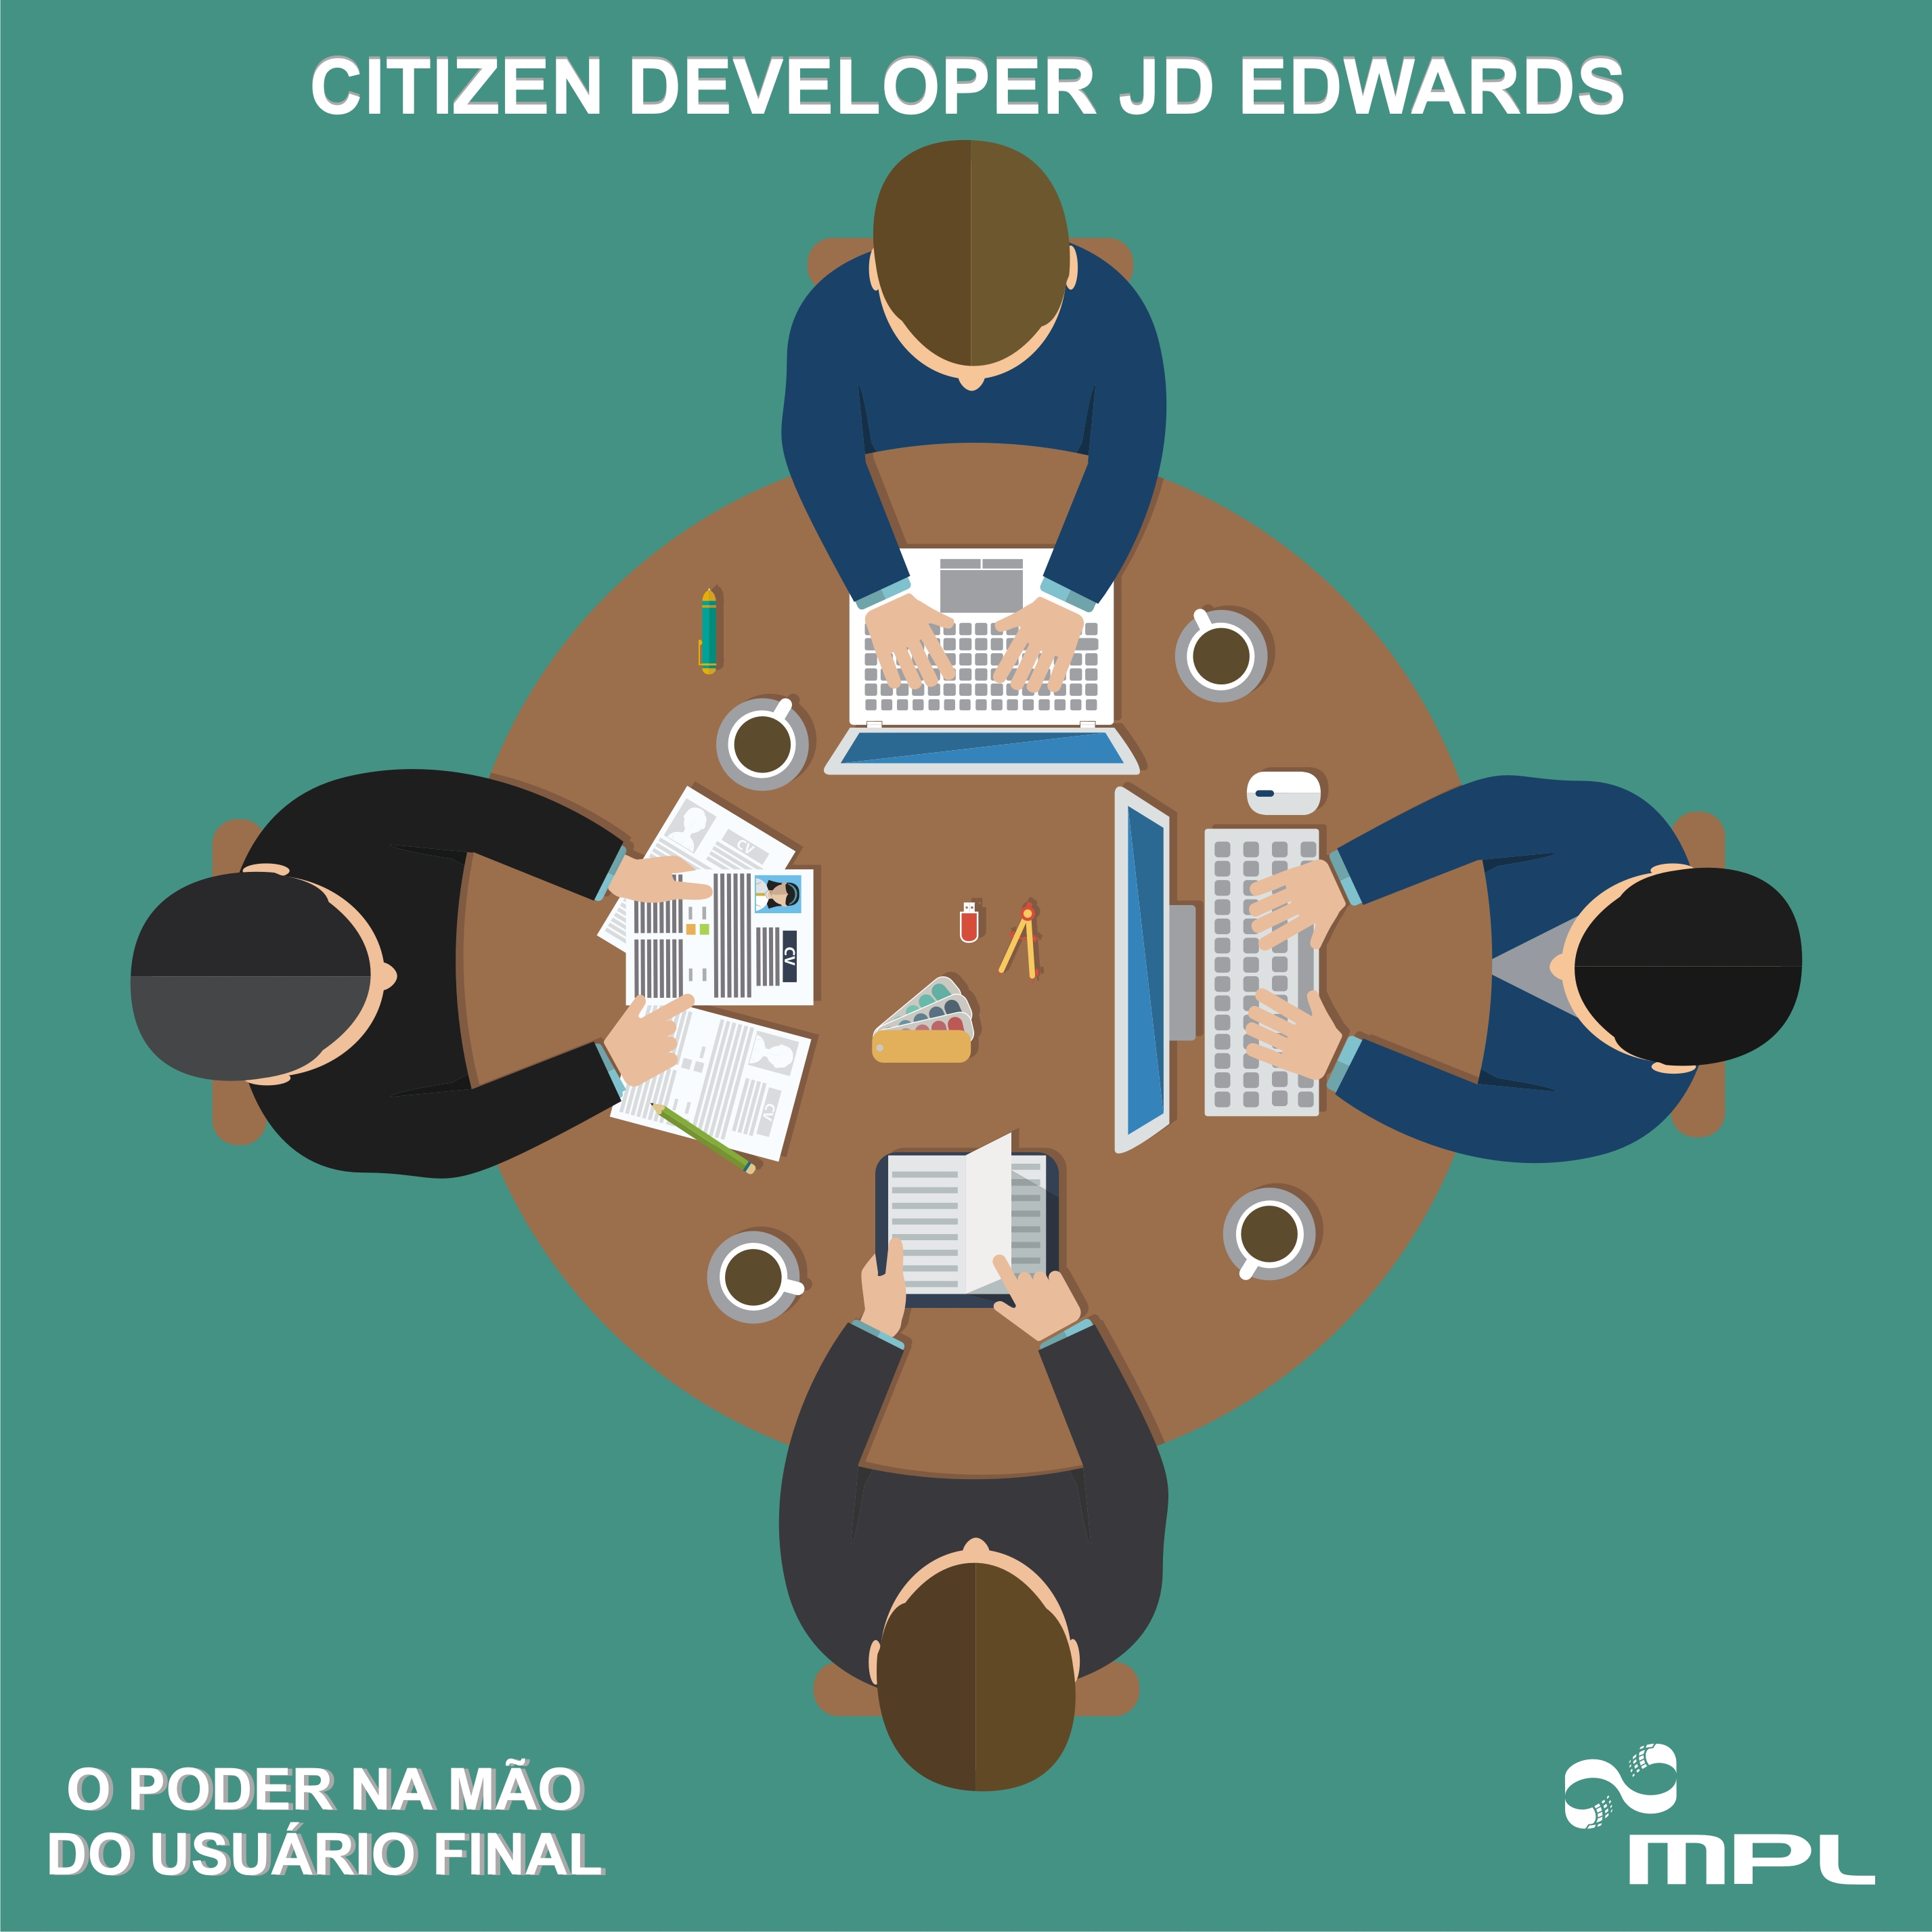 Citizen Developer JD Edwards